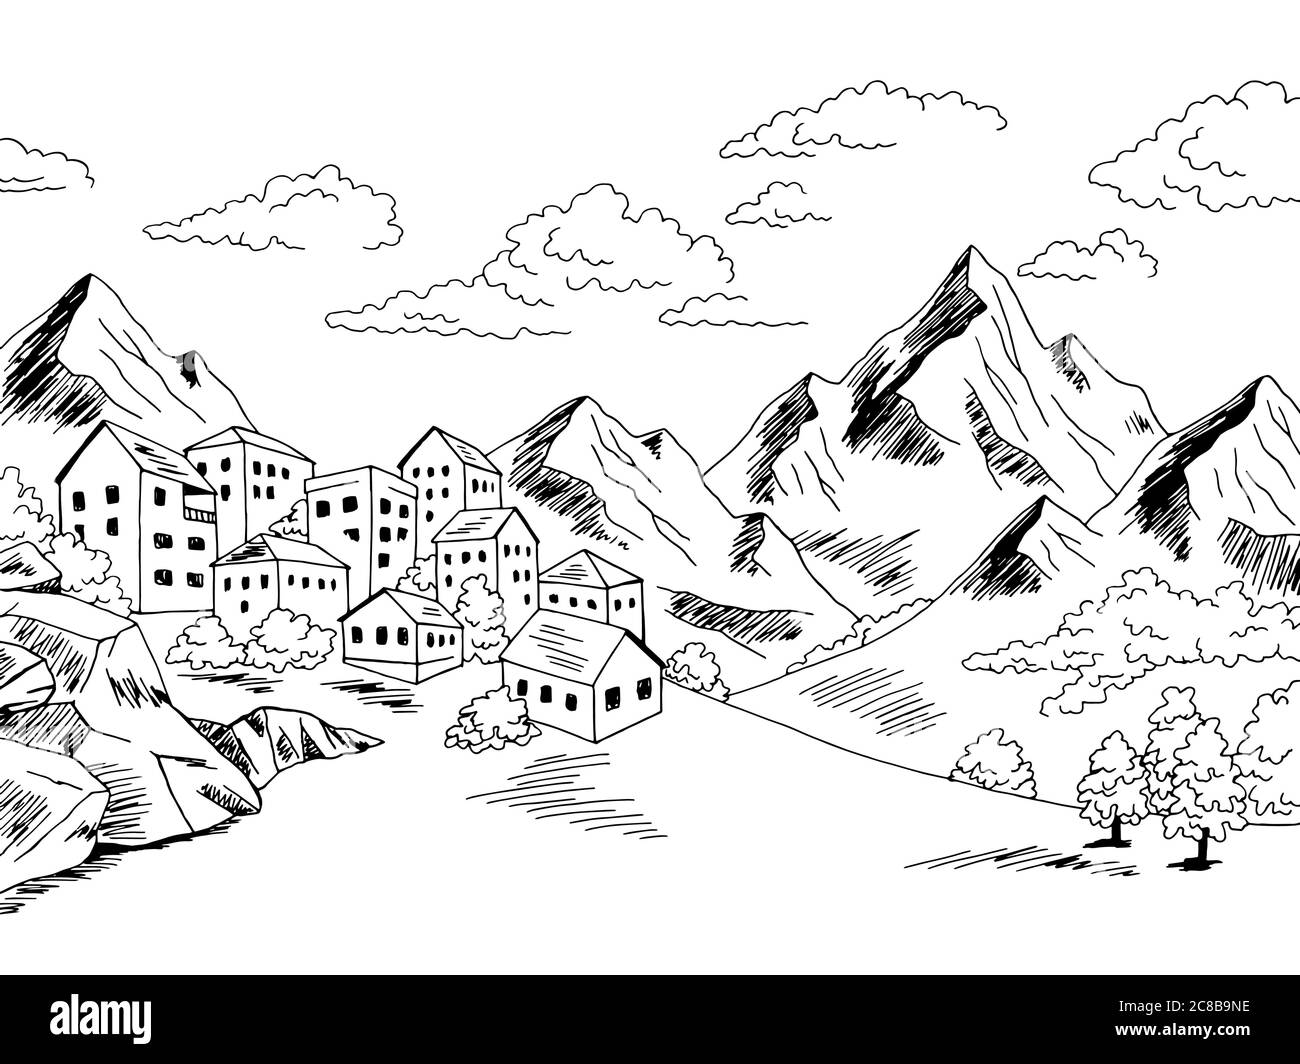 Stadt Berg Grafik schwarz weiß Landschaft Skizze Illustration Vektor Stock Vektor